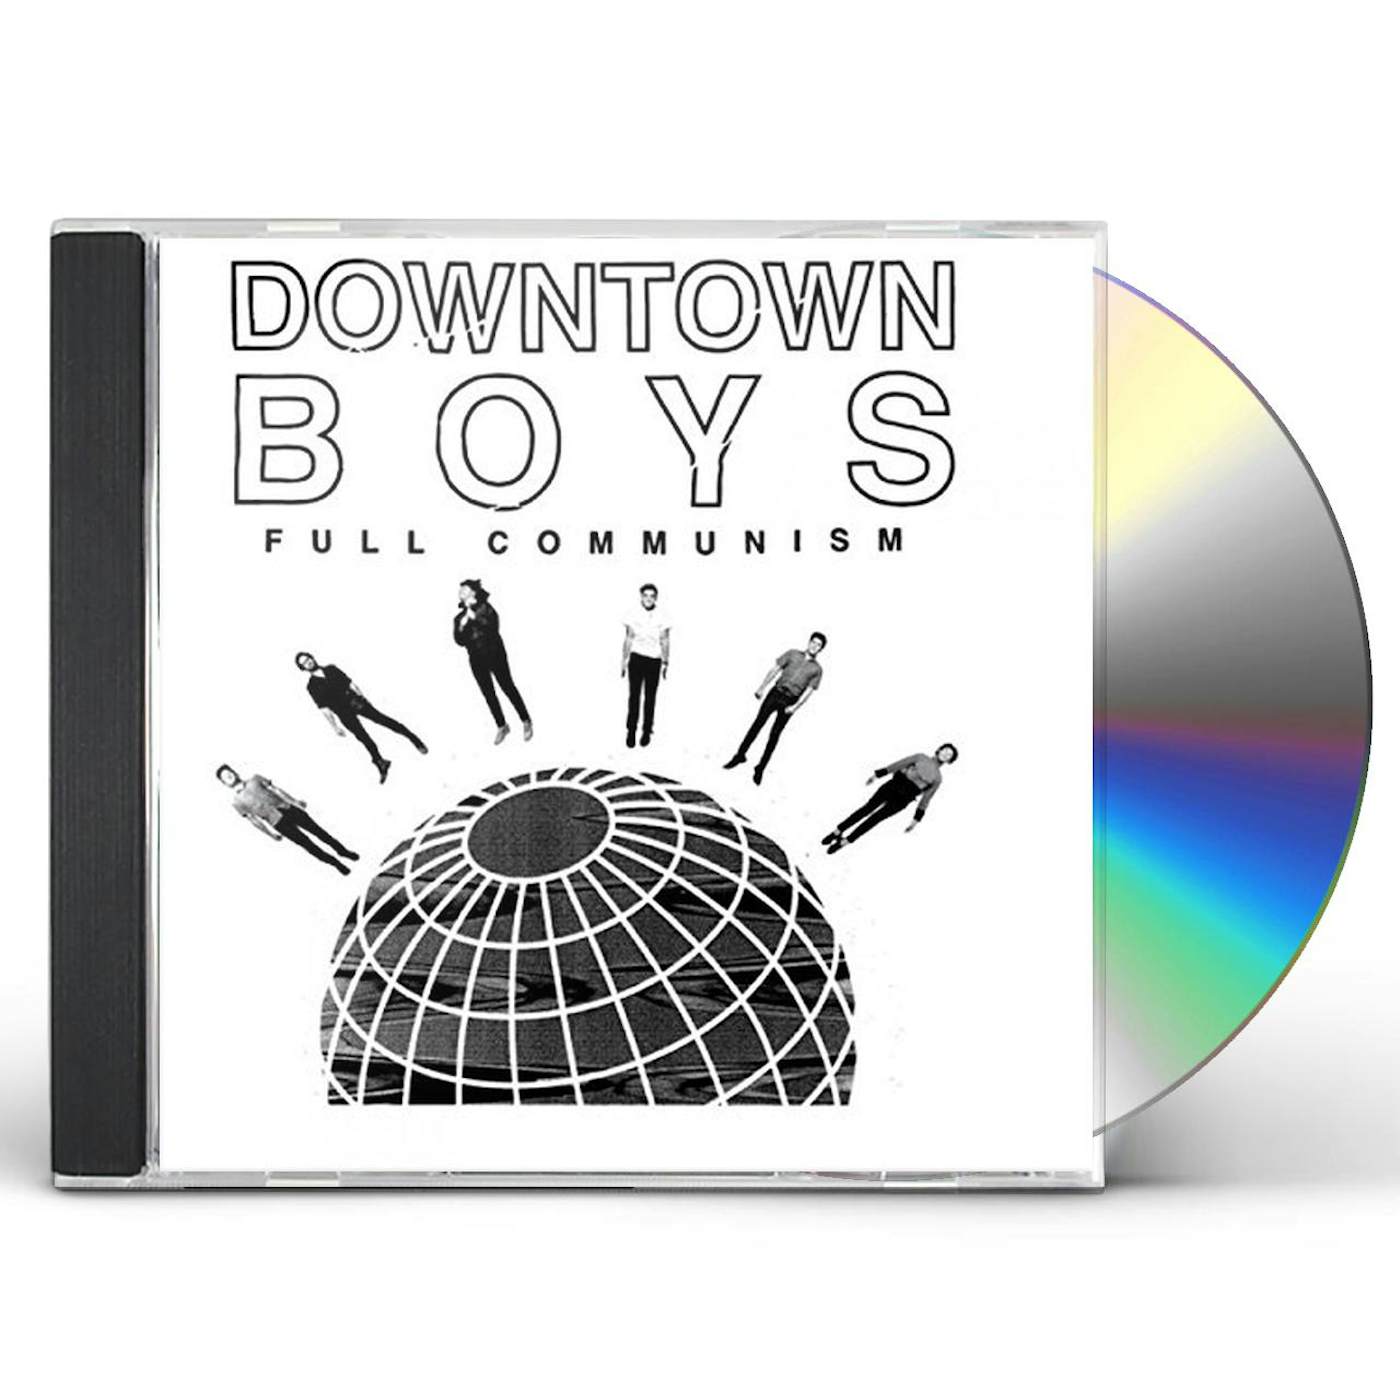 Downtown Boys FULL COMMUNISM CD